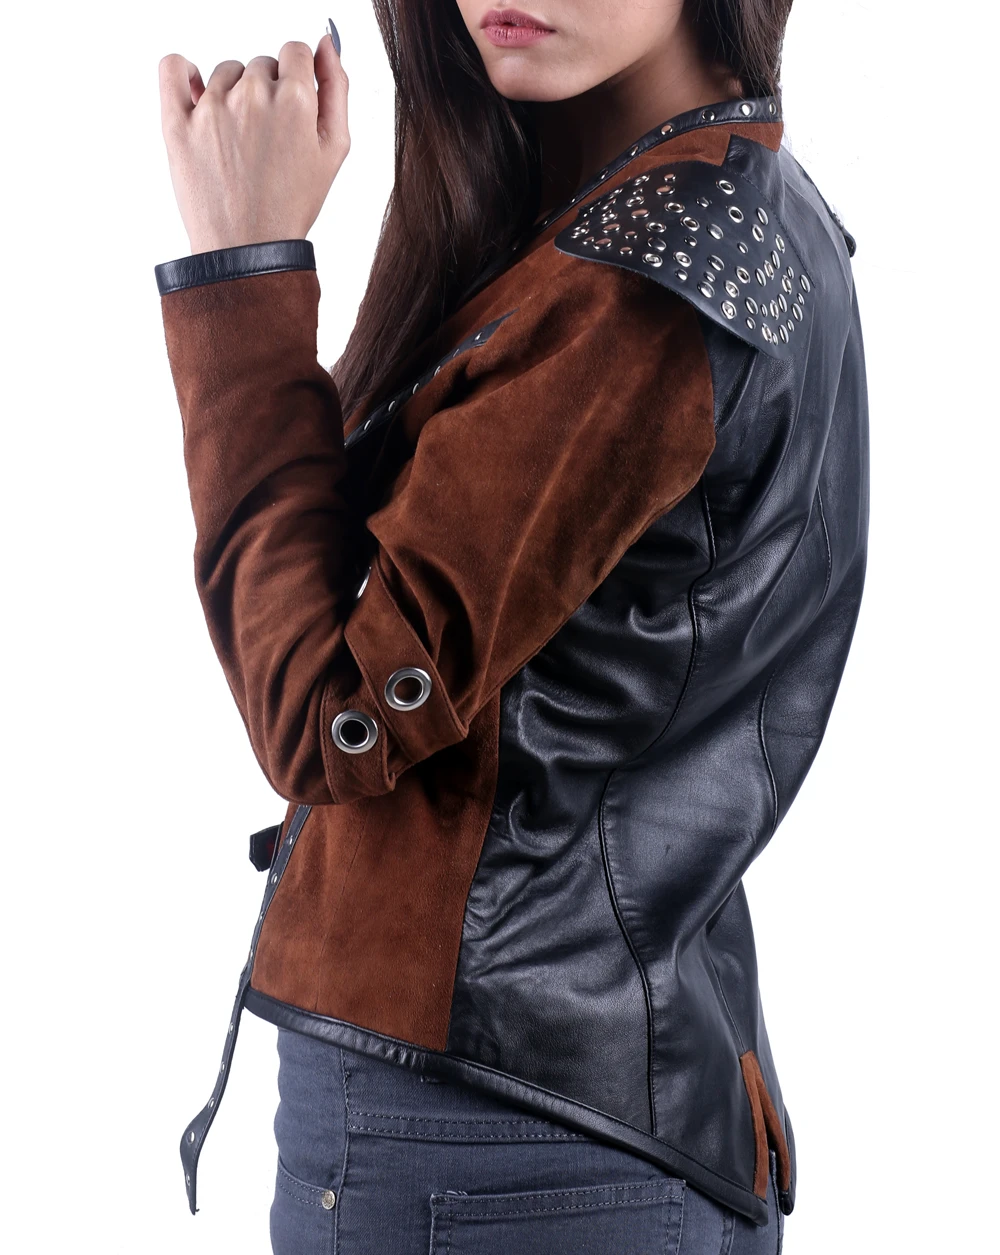 Shannara Chronicles Eretrias replica leather jacket